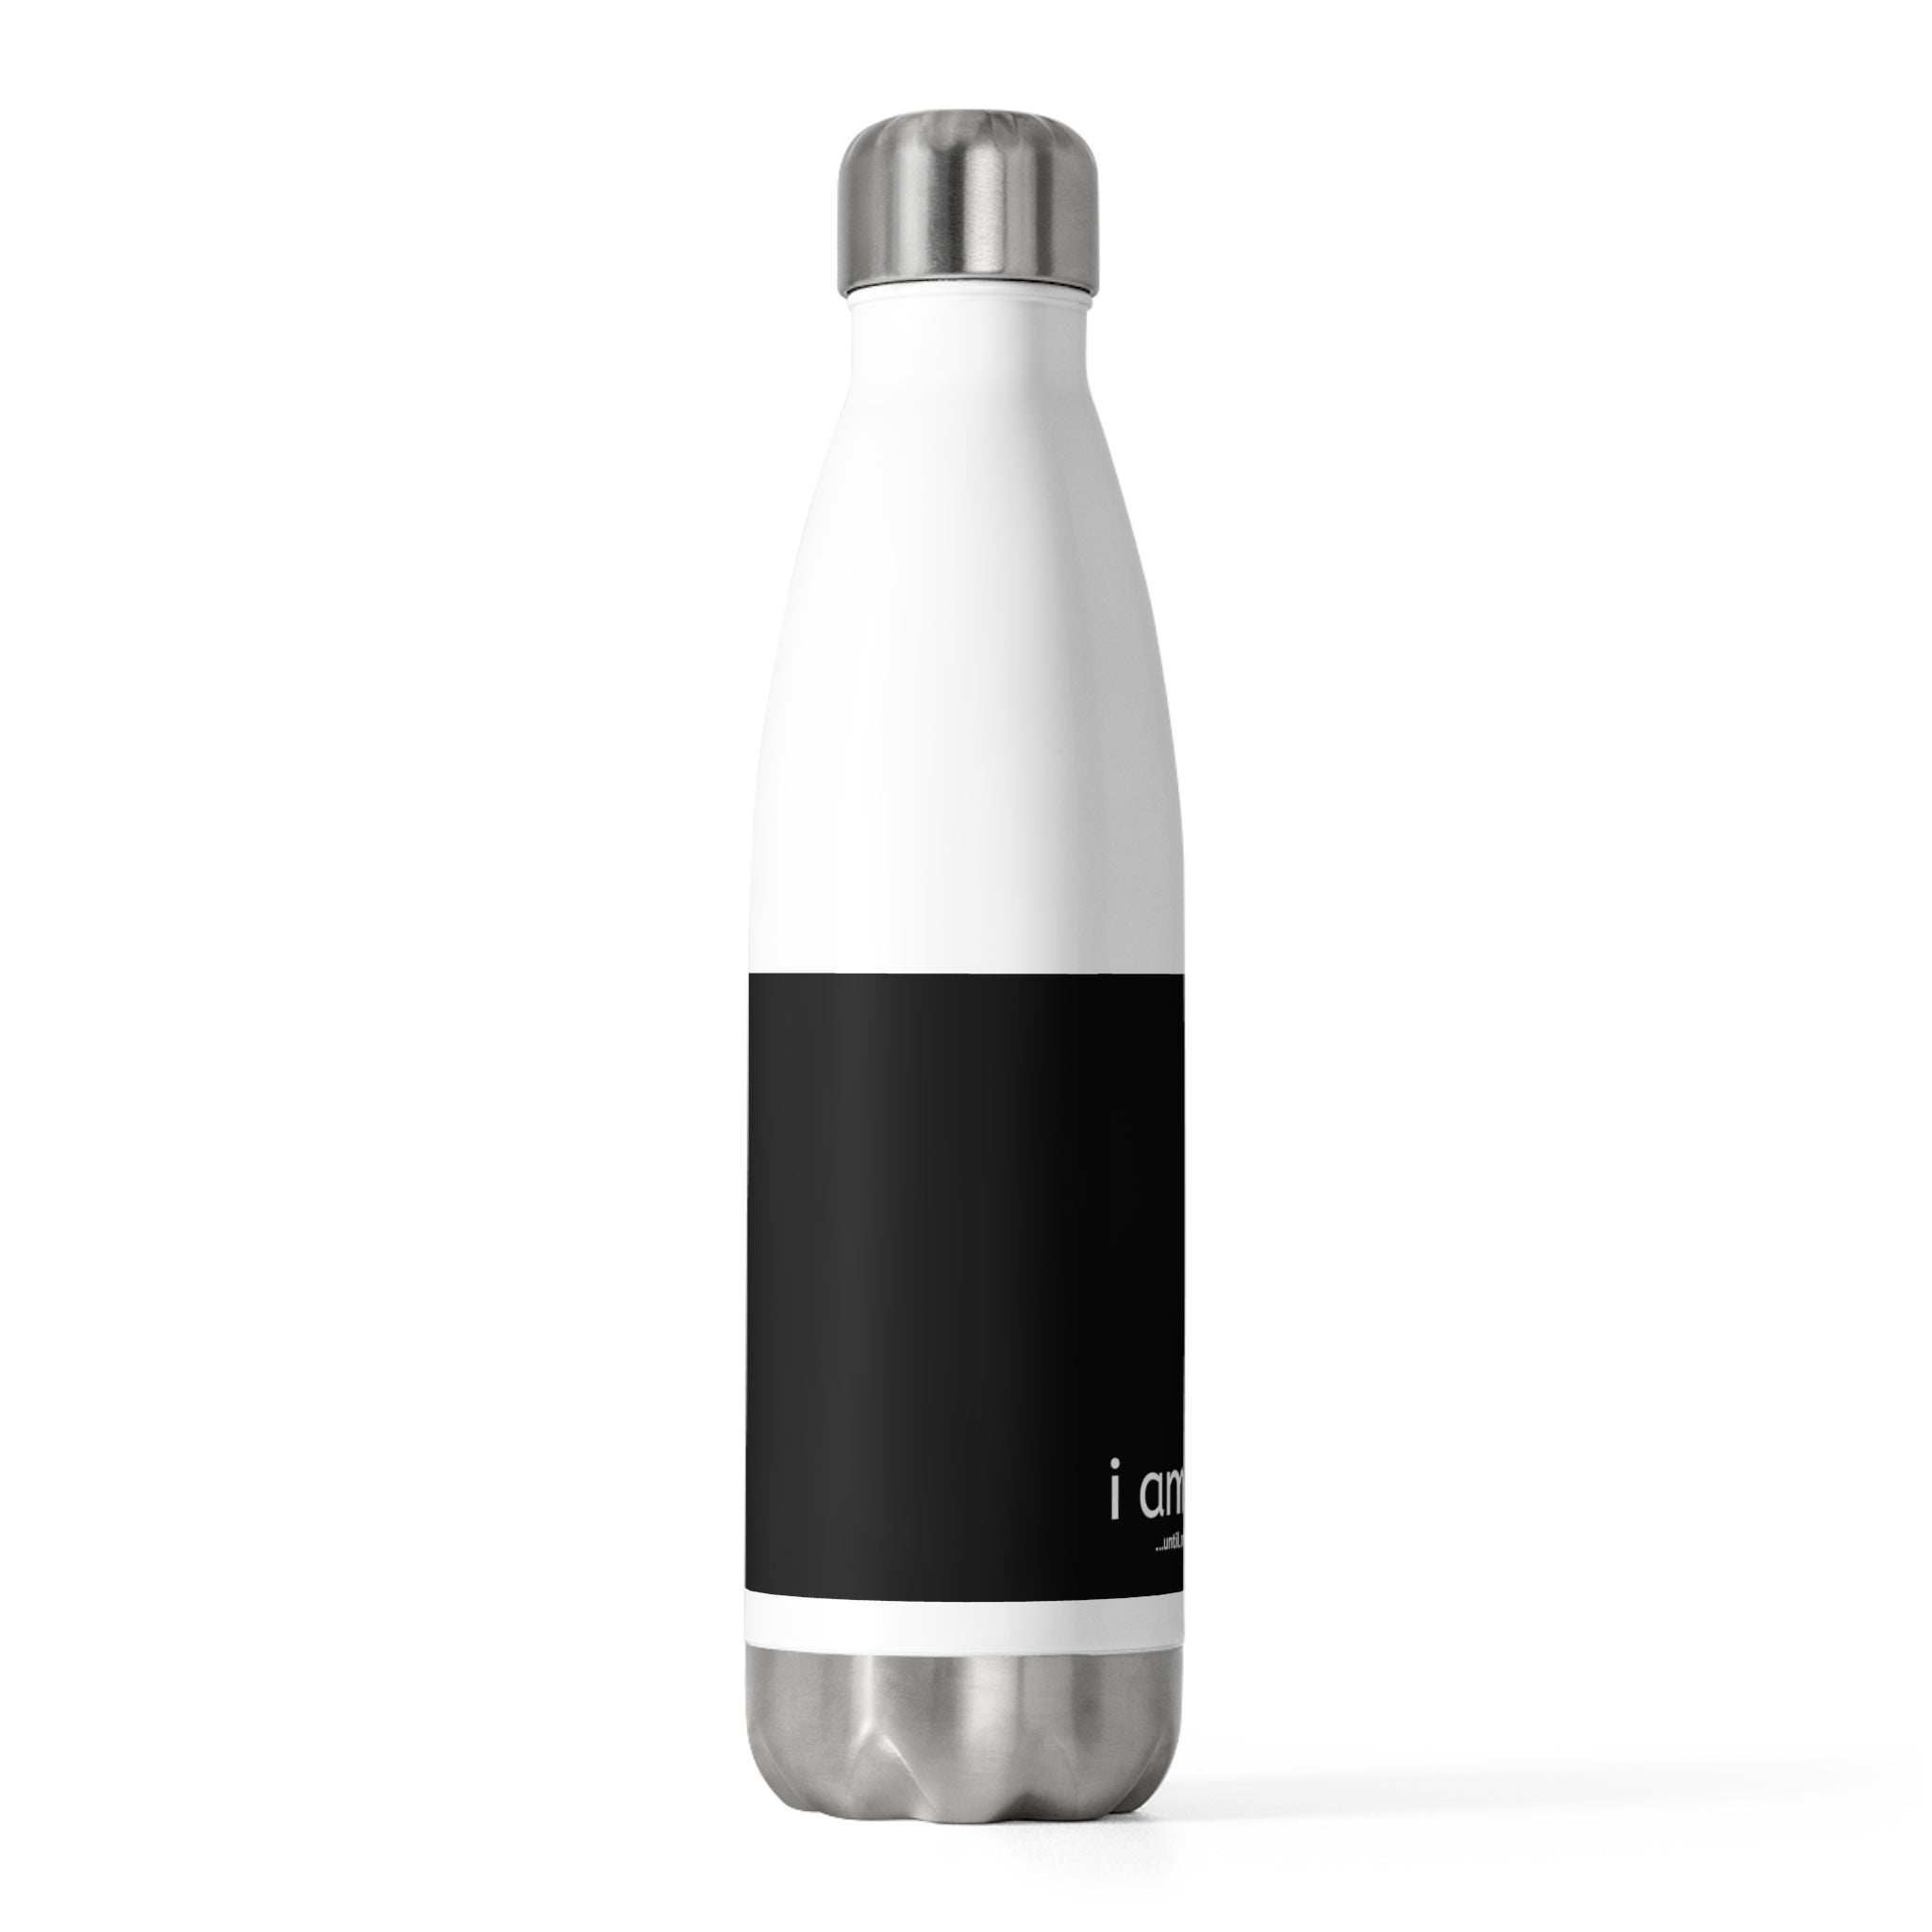 i am Ekho (Insulated Stainless Steel Bottle - 20oz)